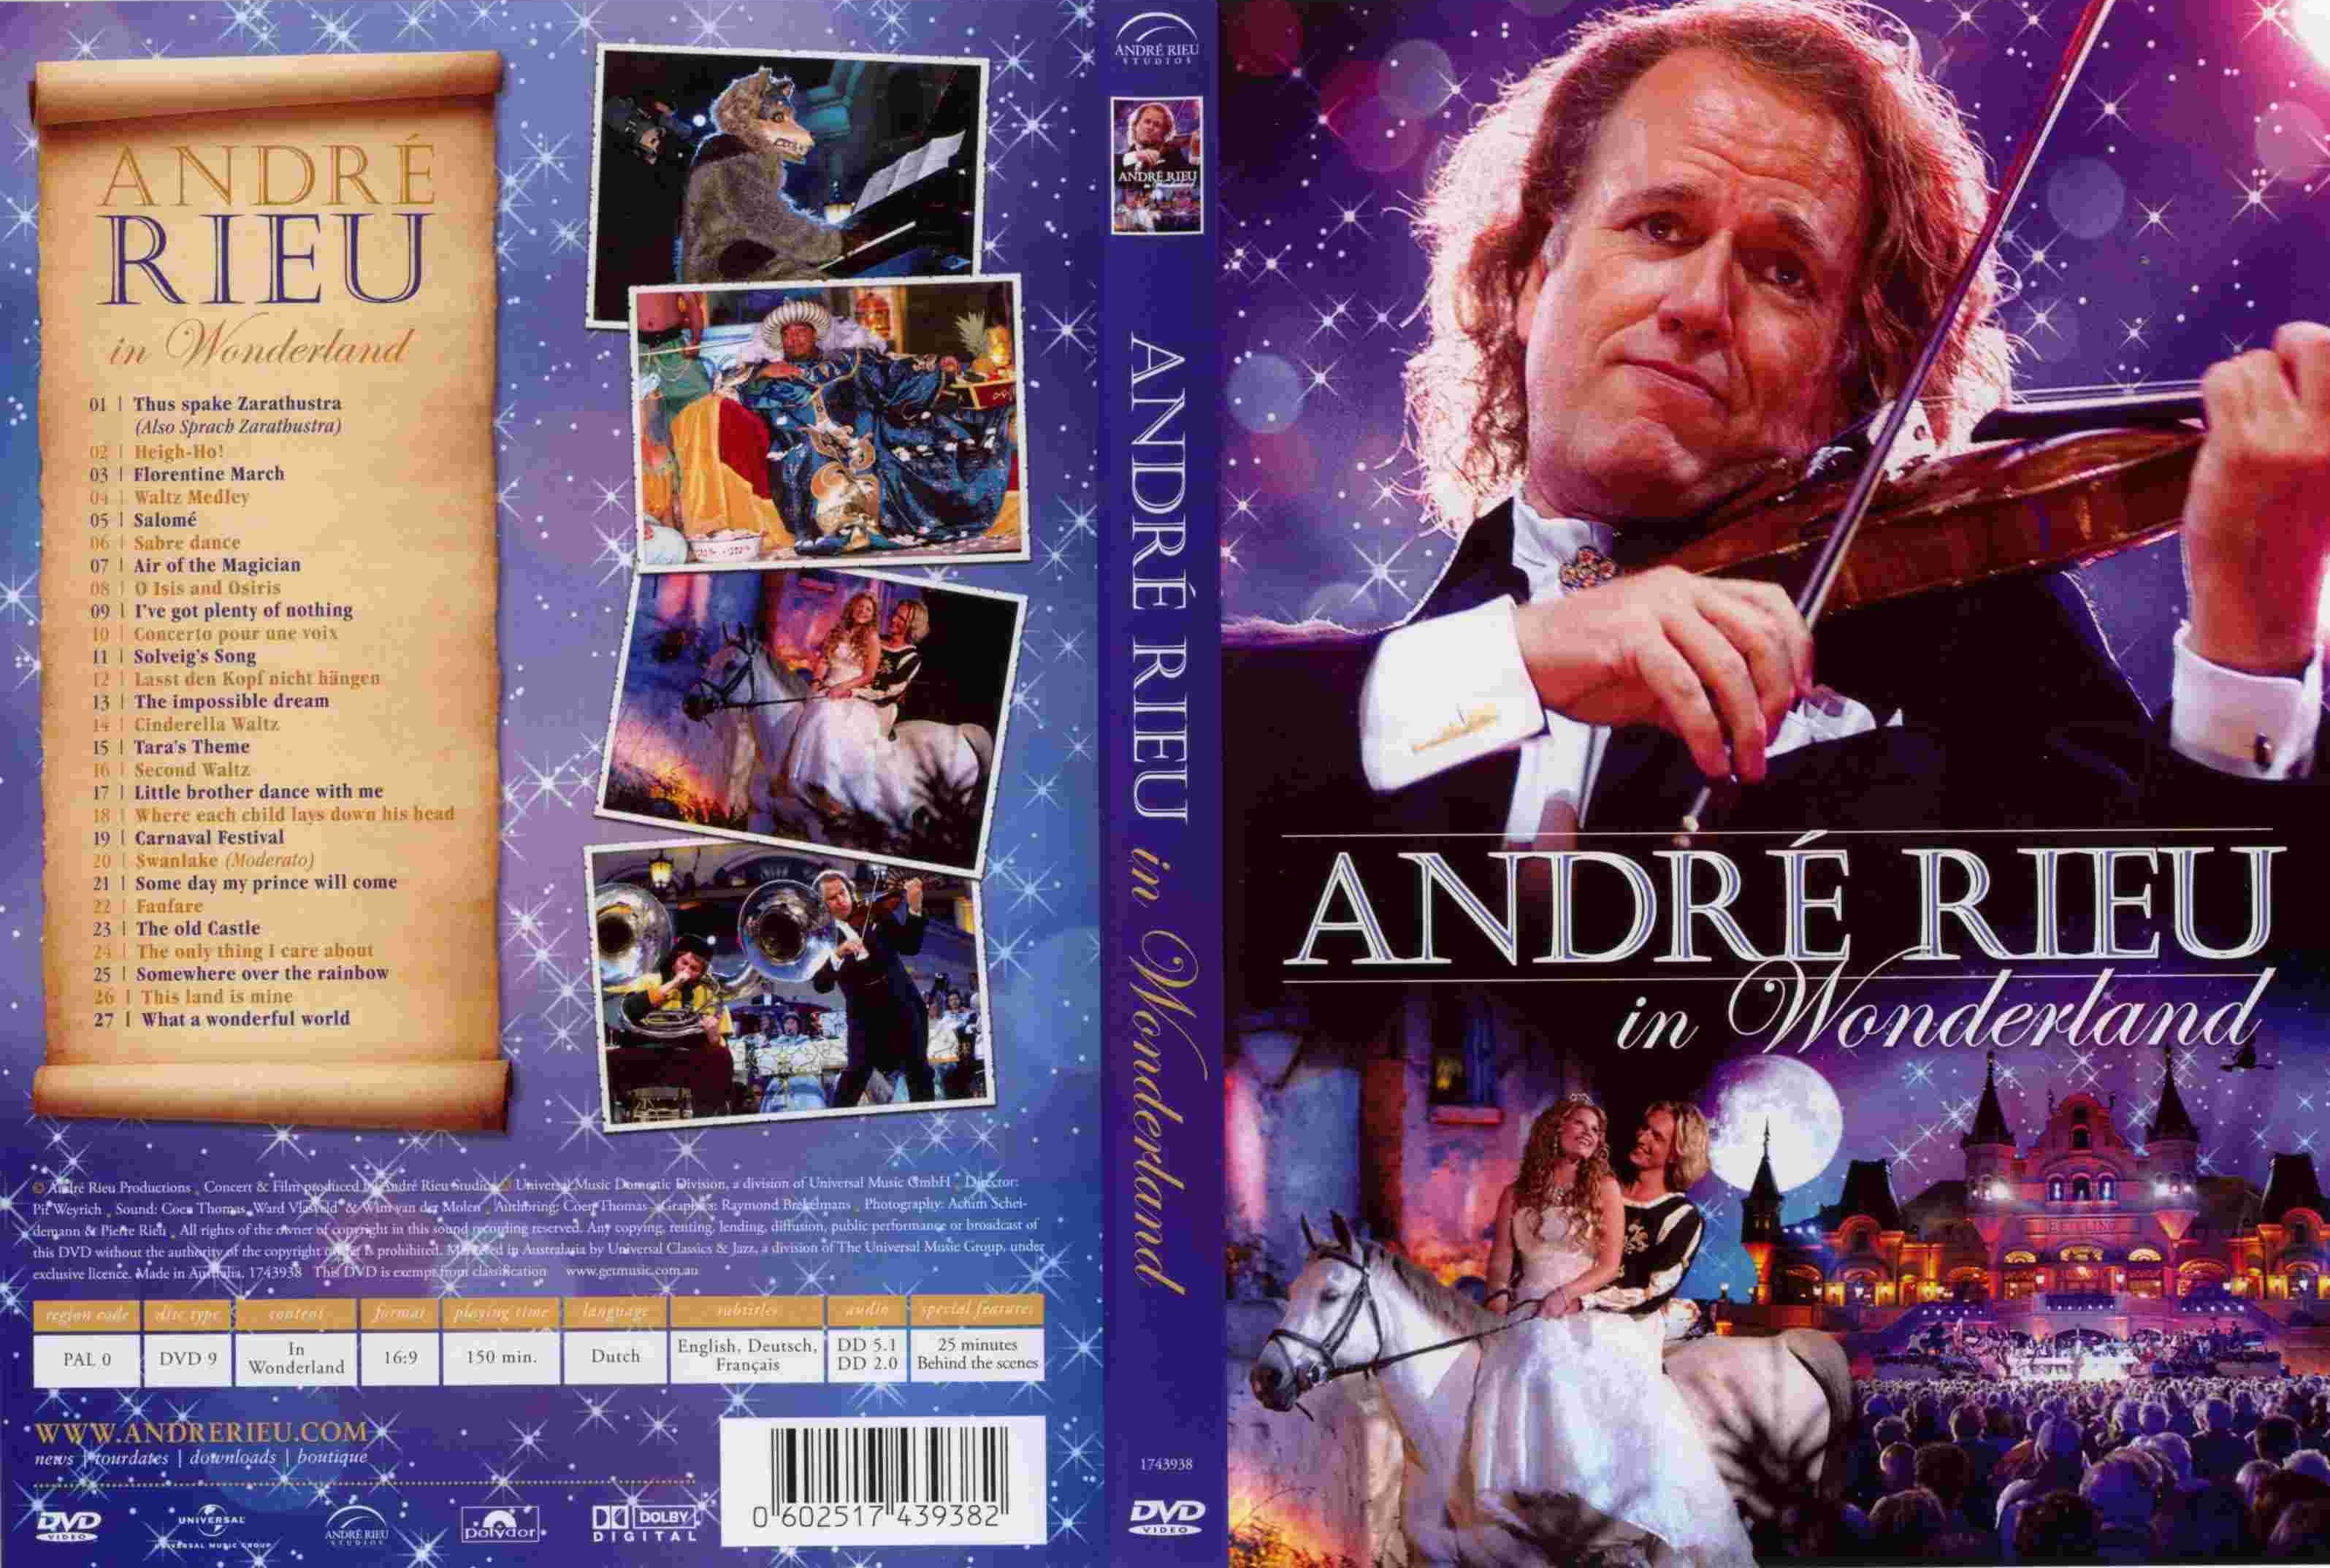 Jaquette DVD Andre rieu In Wonderland